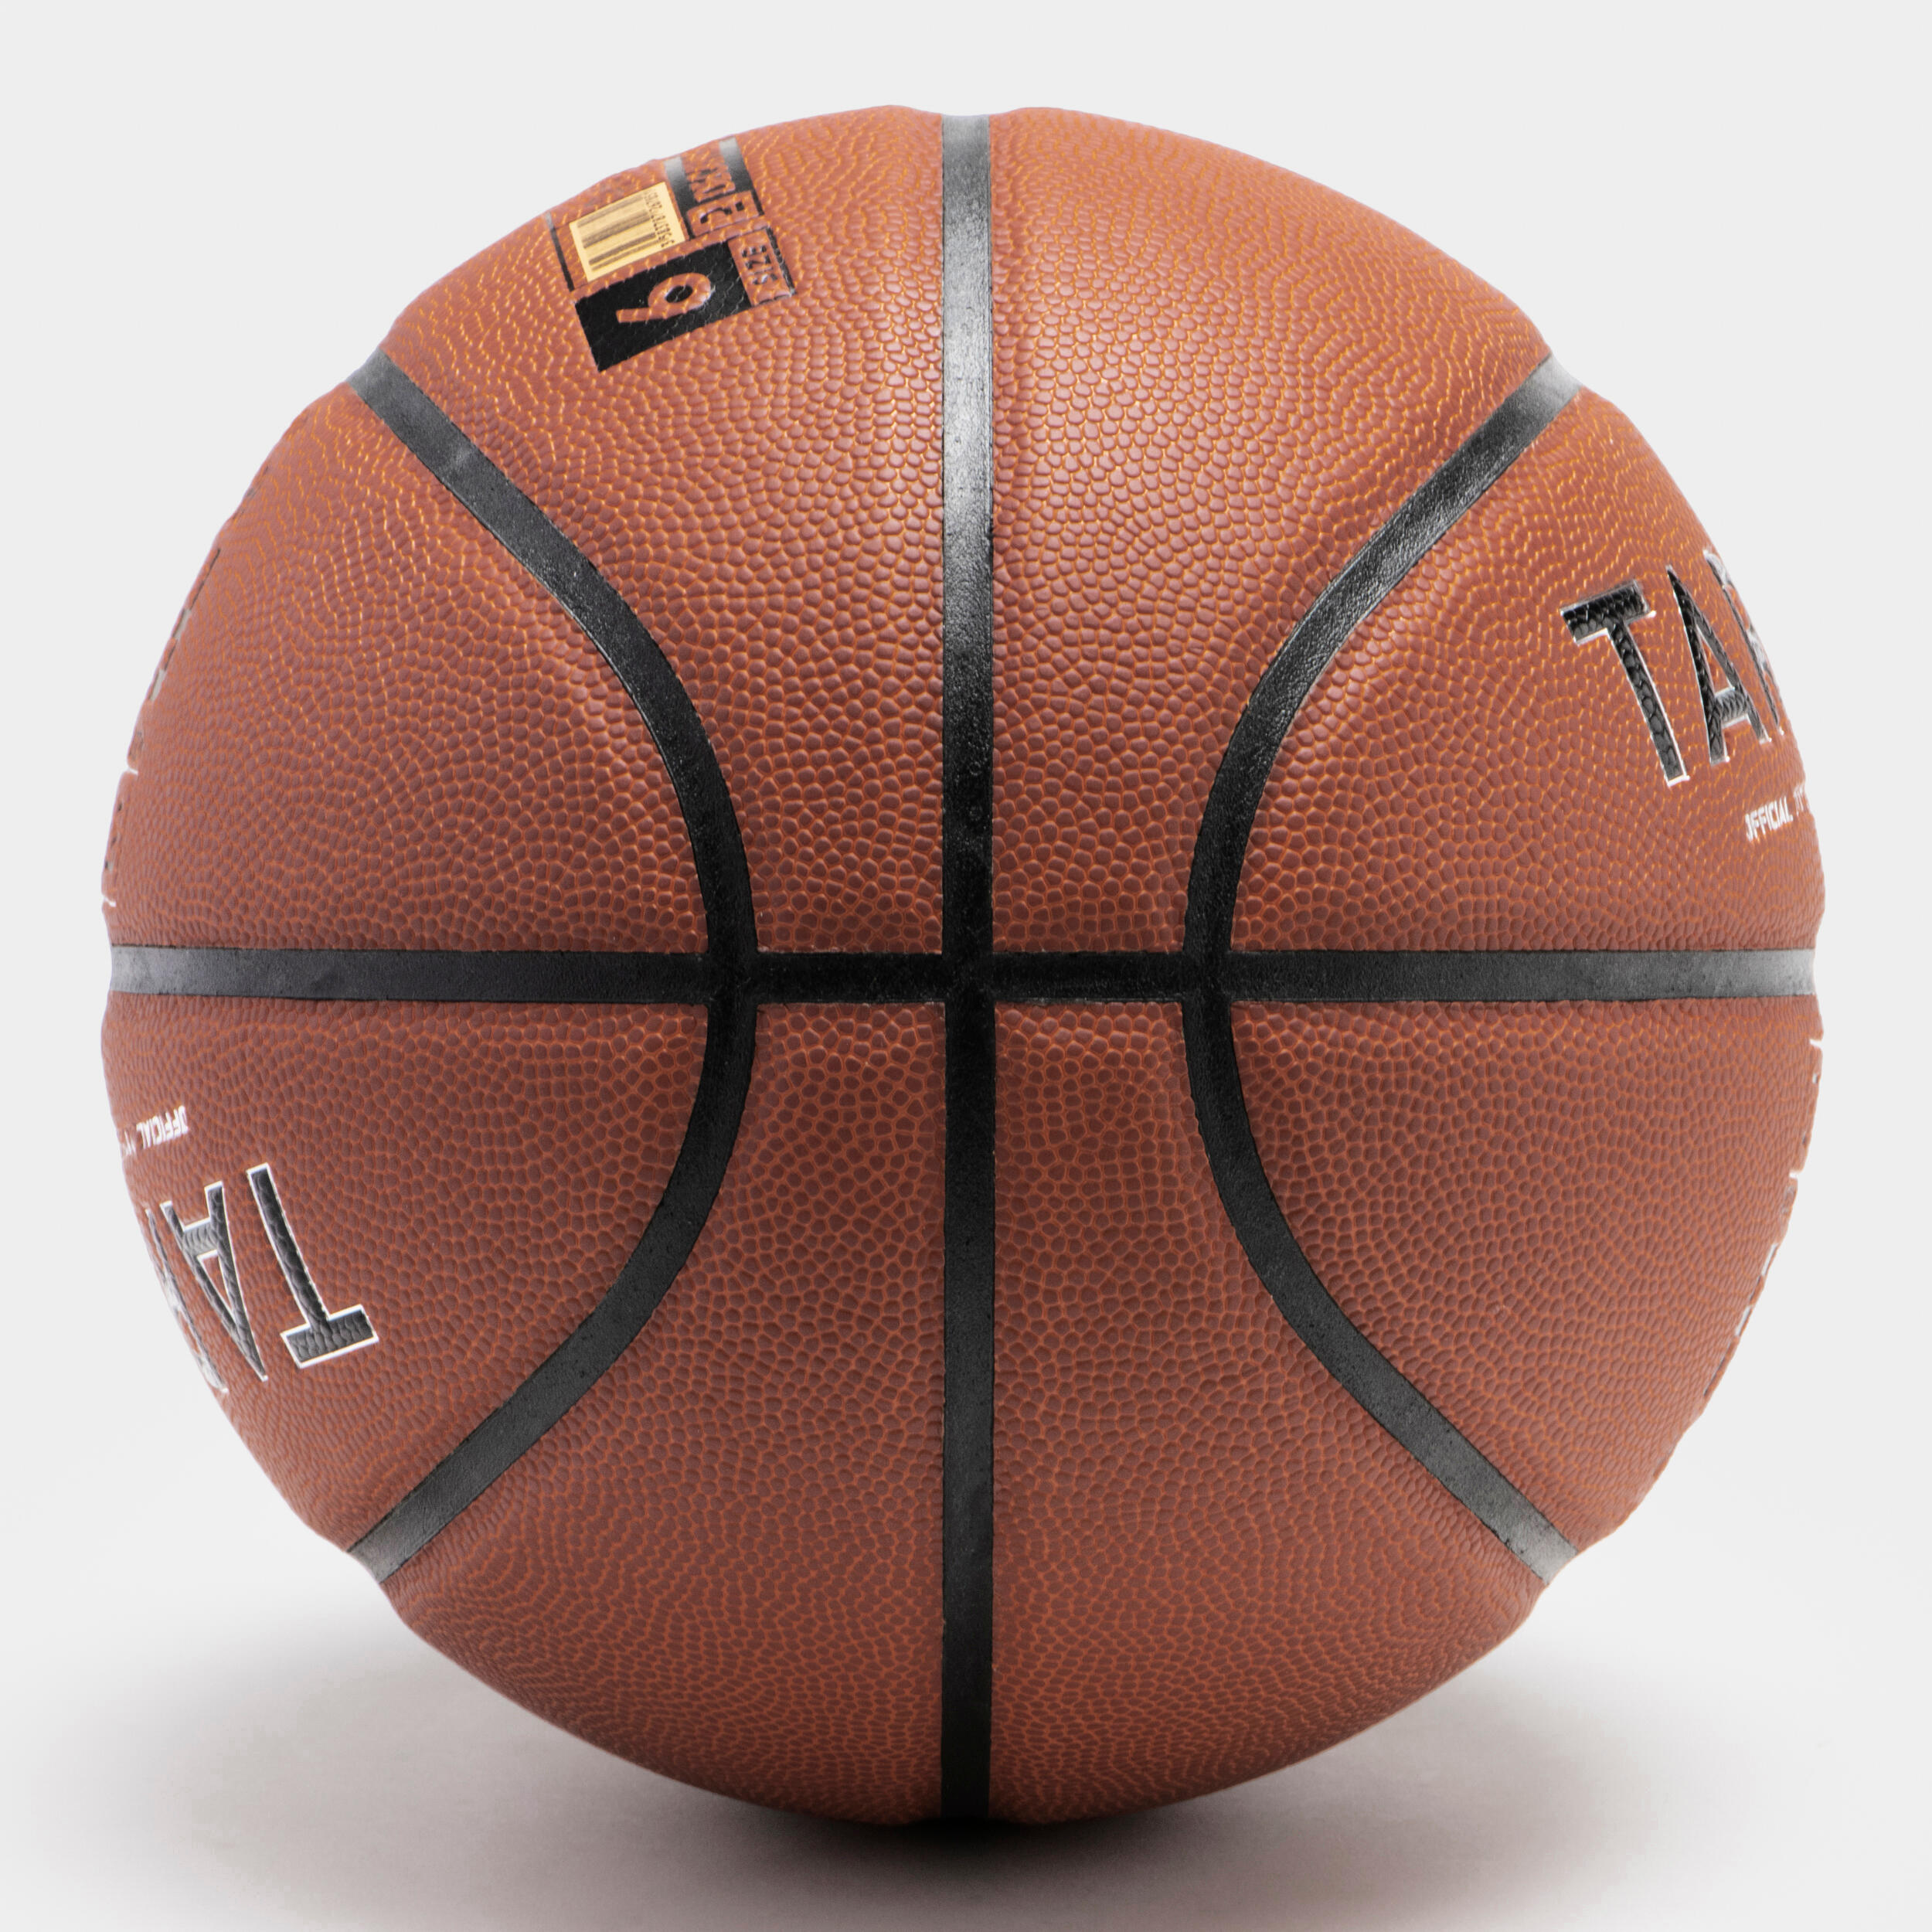 Size 6 FIBA Basketball BT500 Touch - Orange 3/5